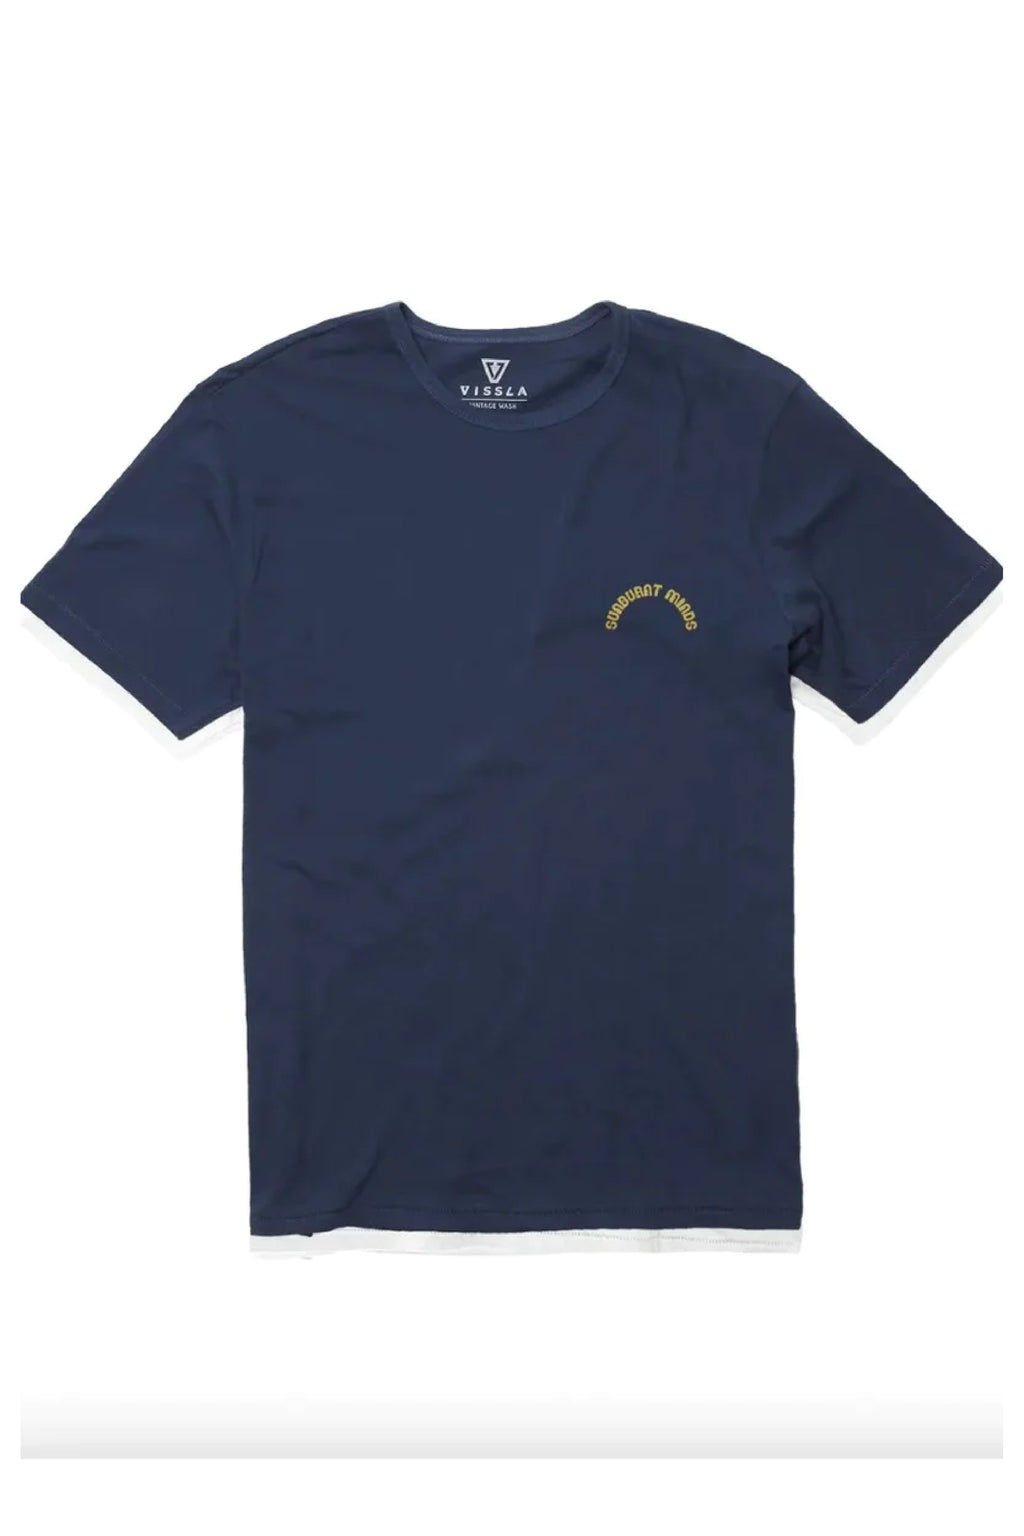 Vissla - Sunburnt Minds T-Shirt